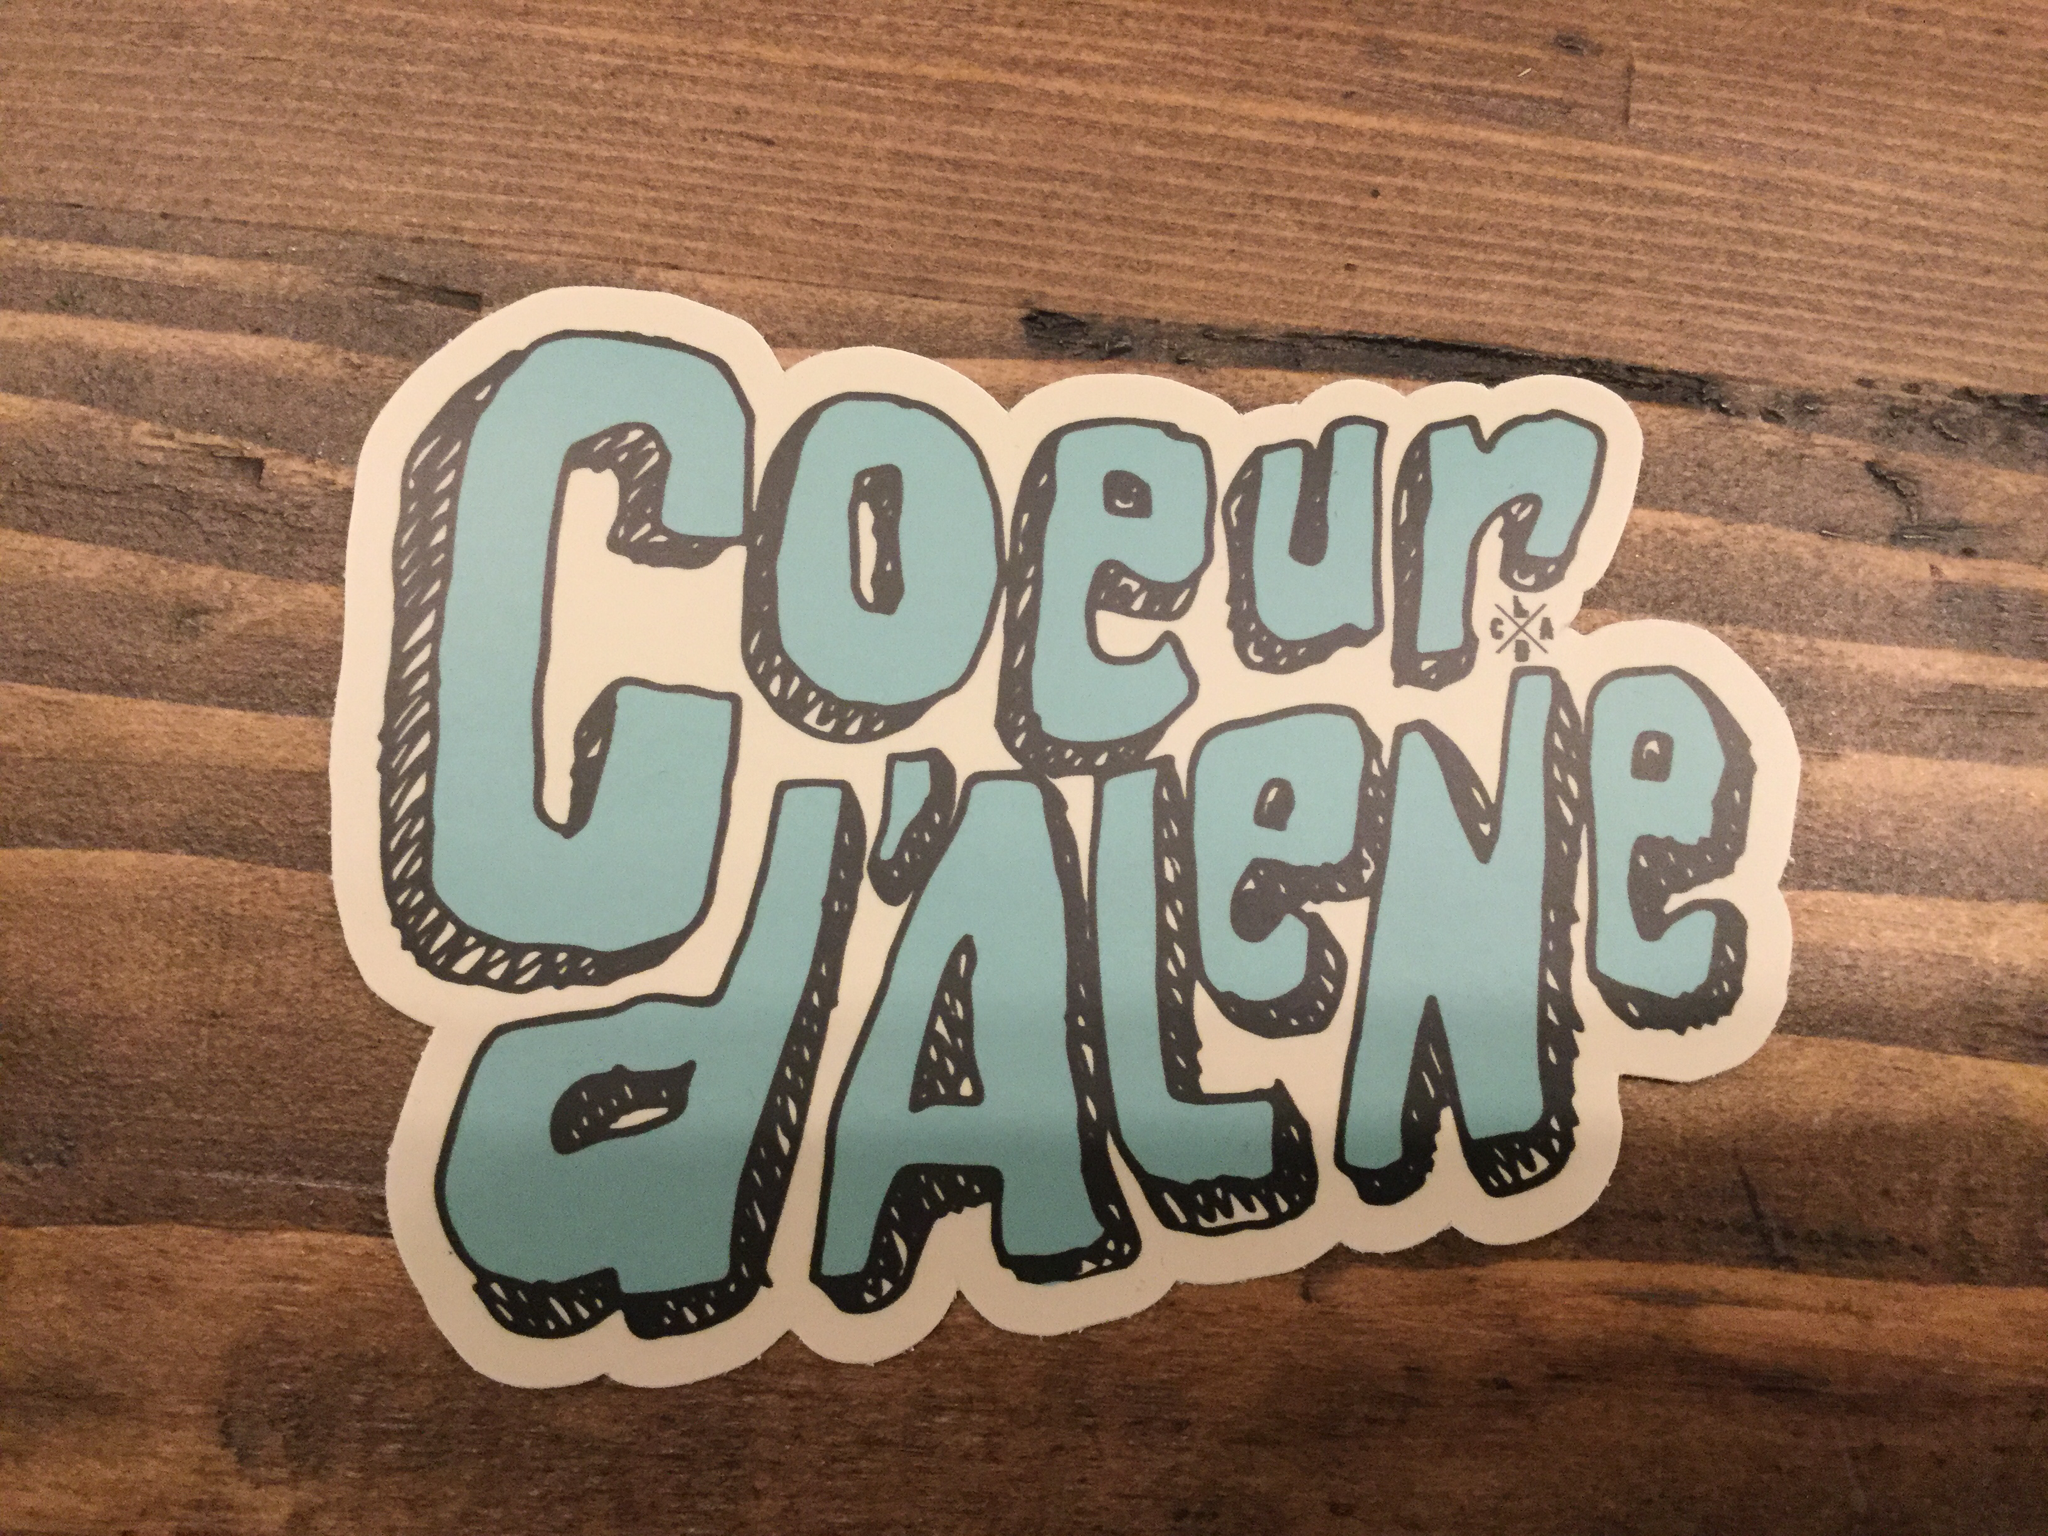 Coeur d'Alene Blue and Tan Sticker